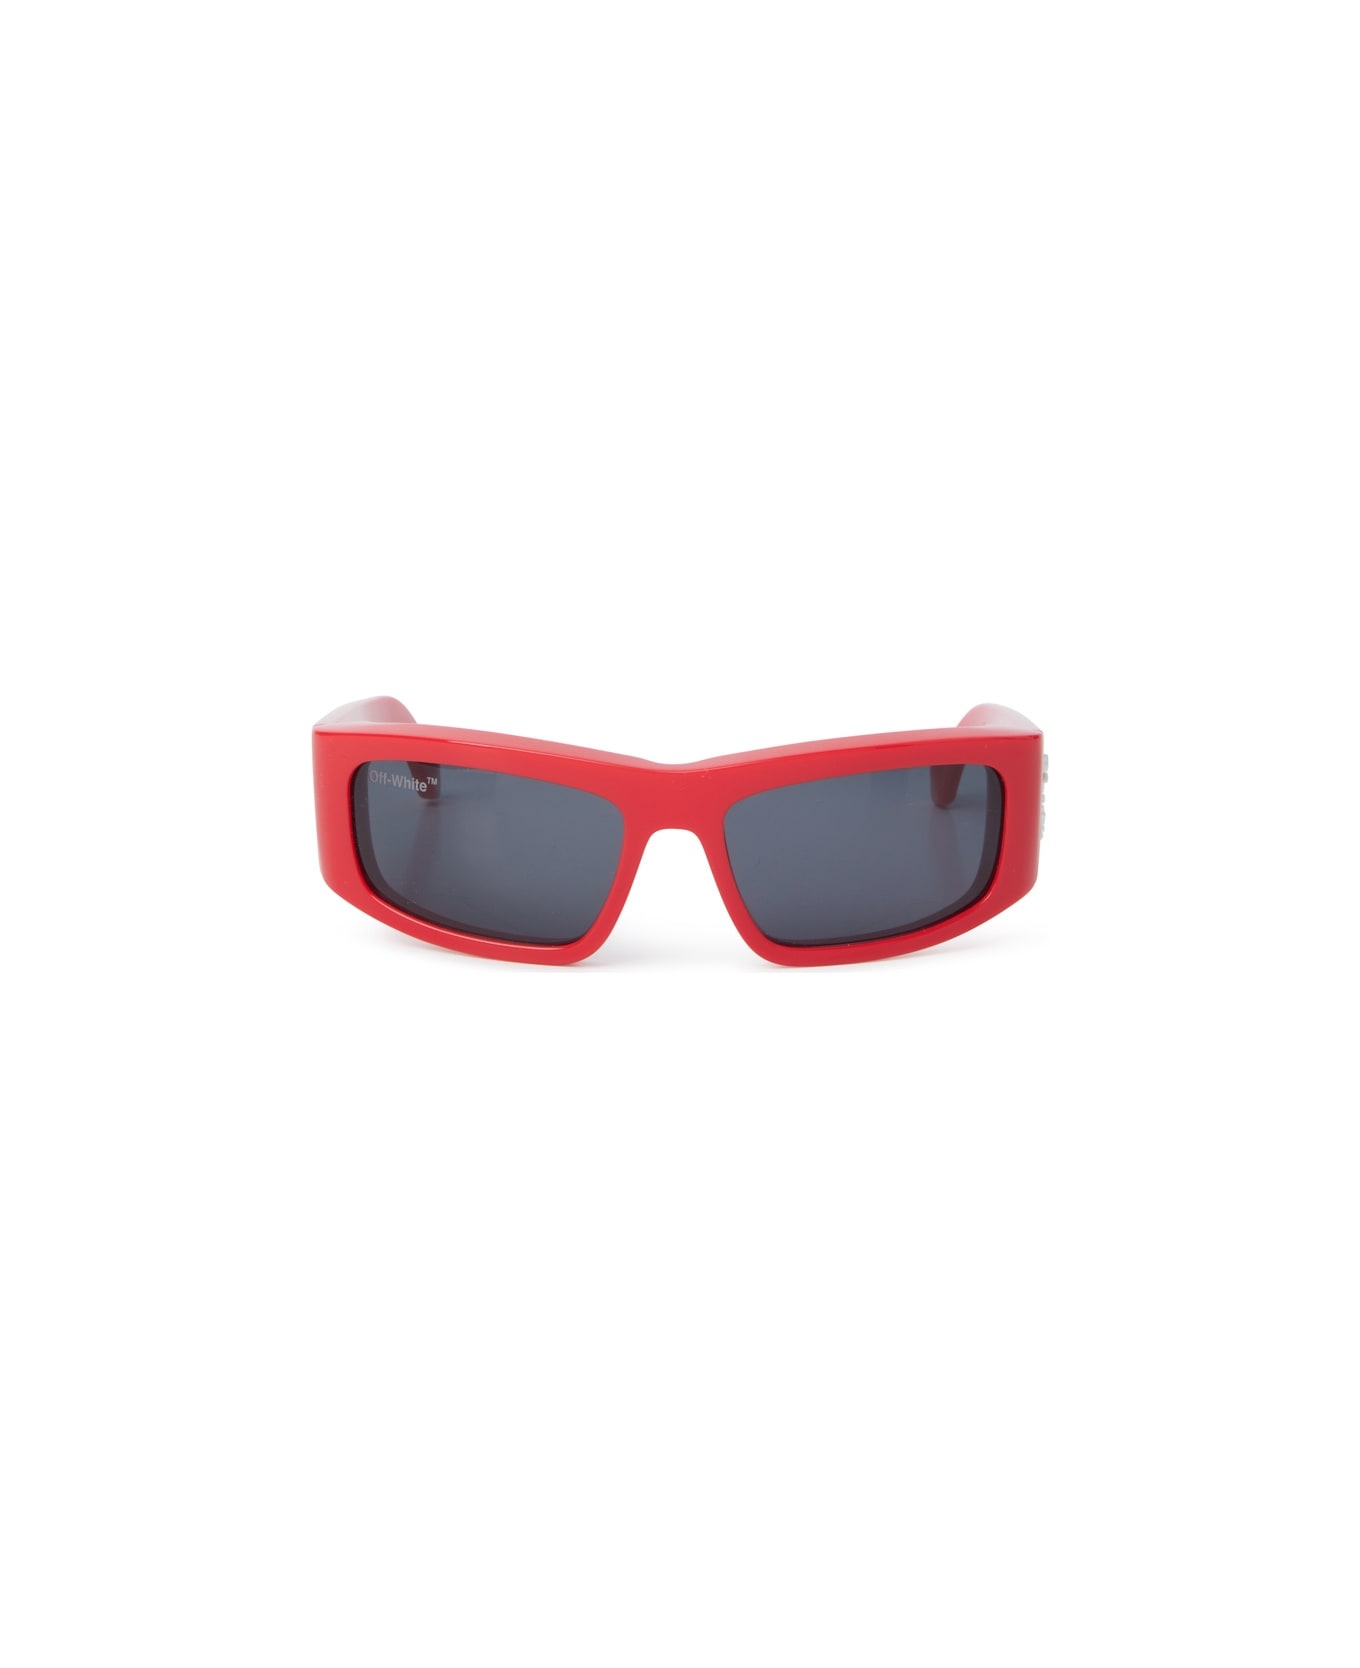 Off-White JOSEPH SUNGLASSES Sunglasses - Red